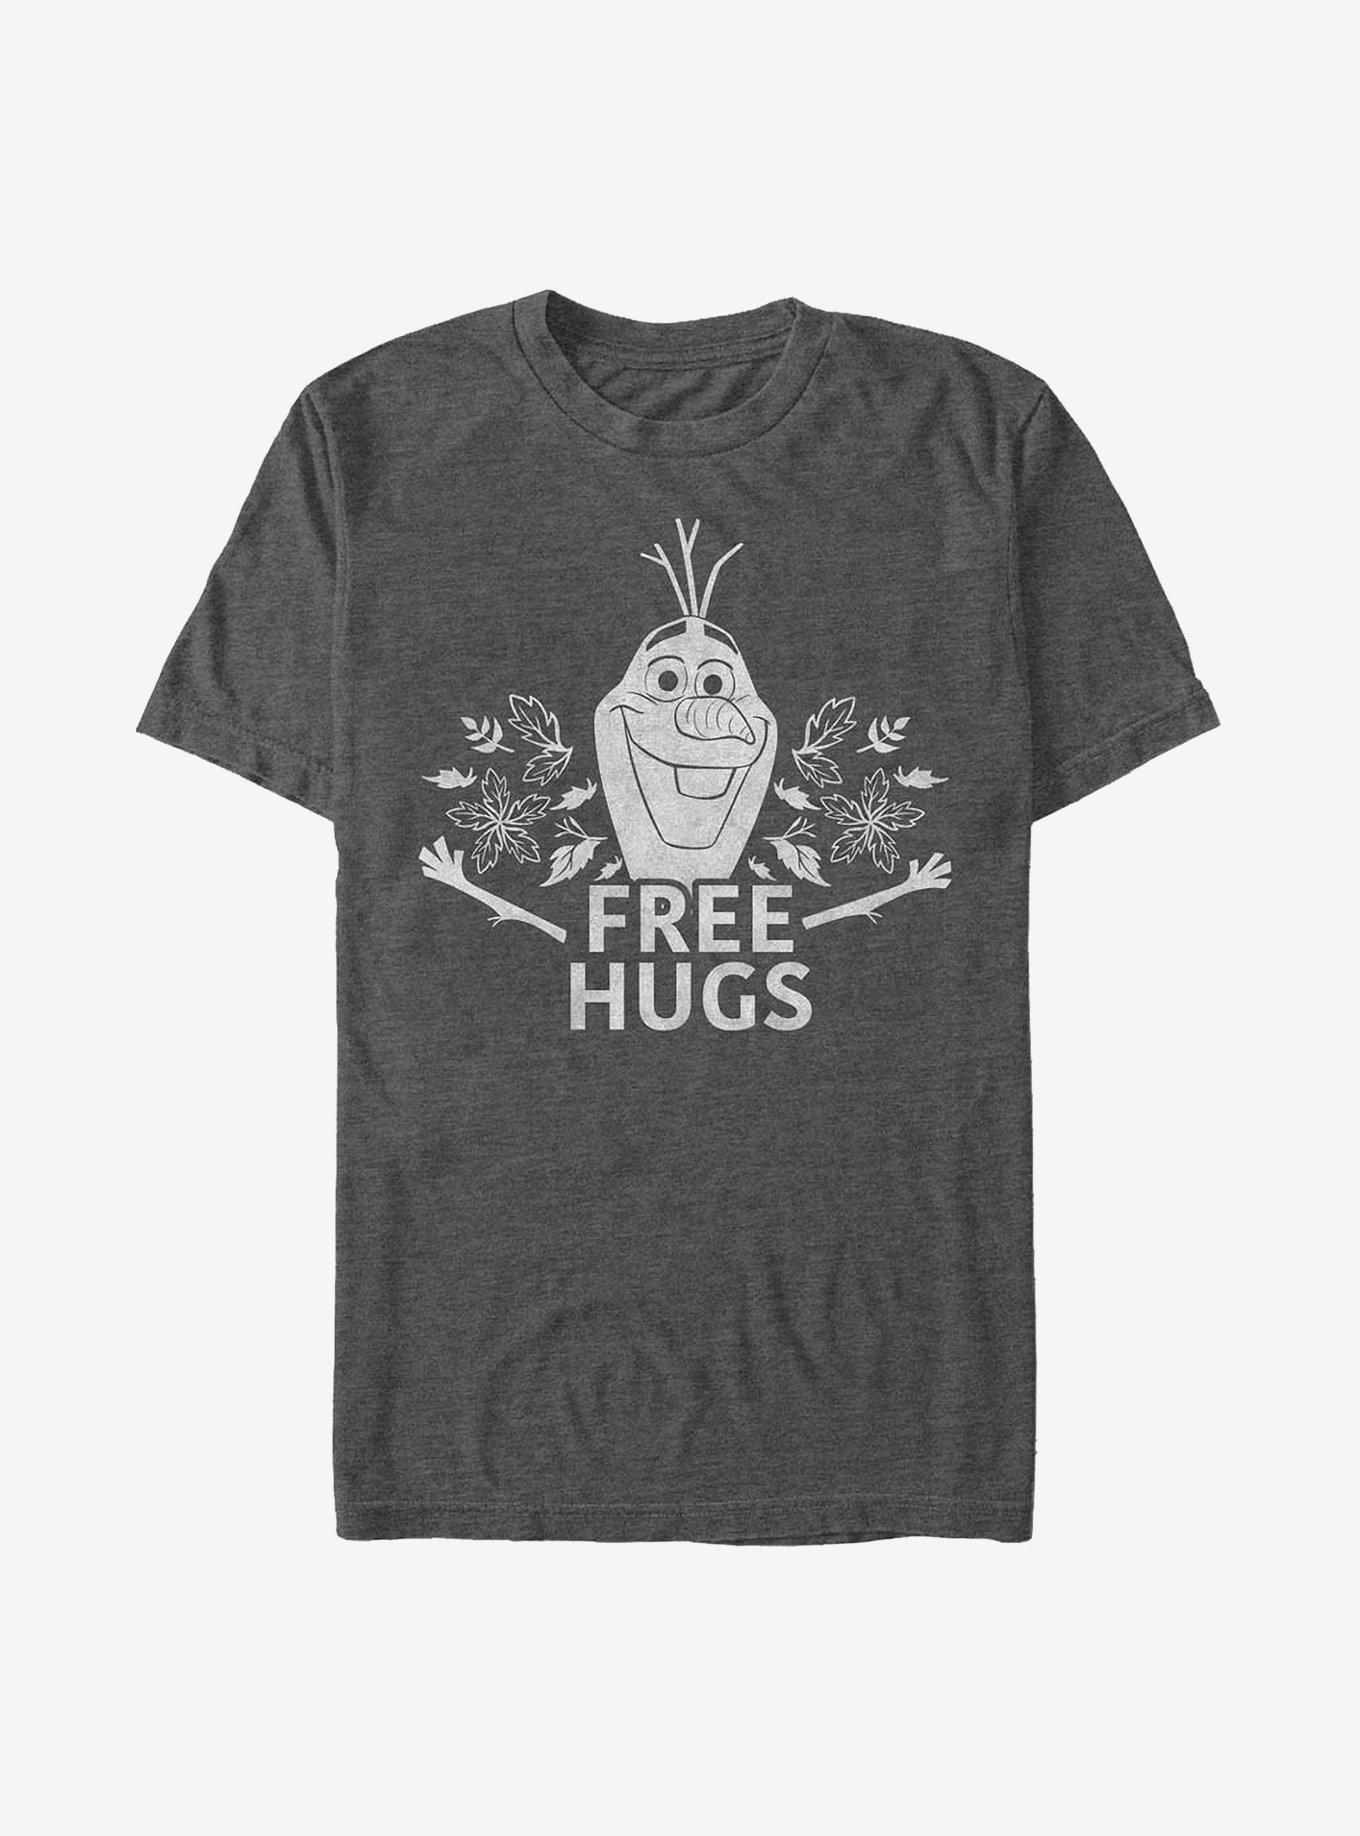 Disney Frozen 2 Free Olaf Hugs T-Shirt, , hi-res